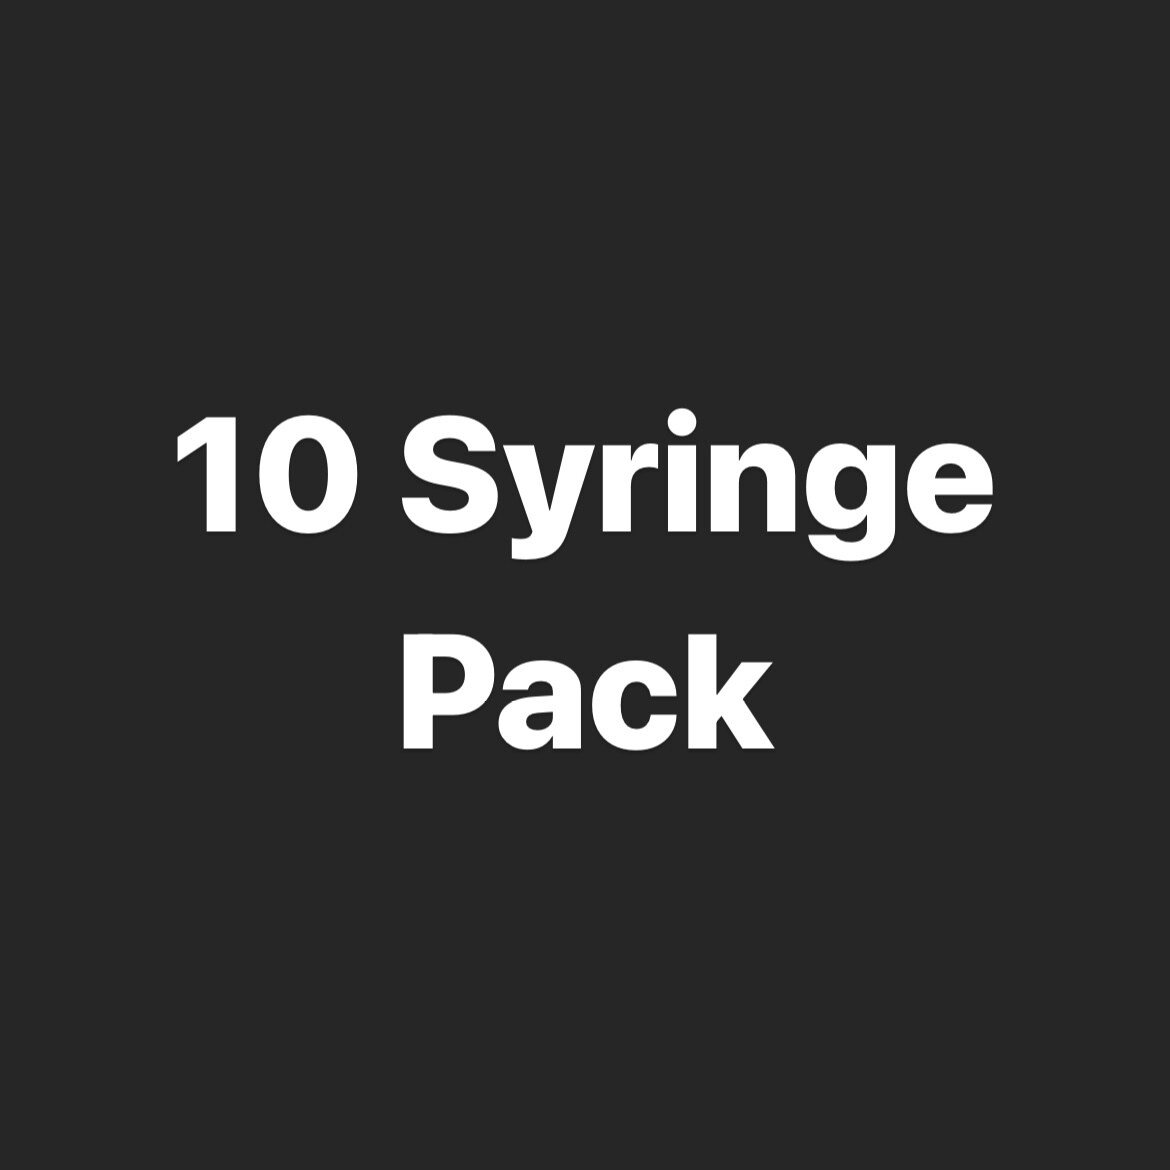 10 Syringe Pack + FREE ENIGMA